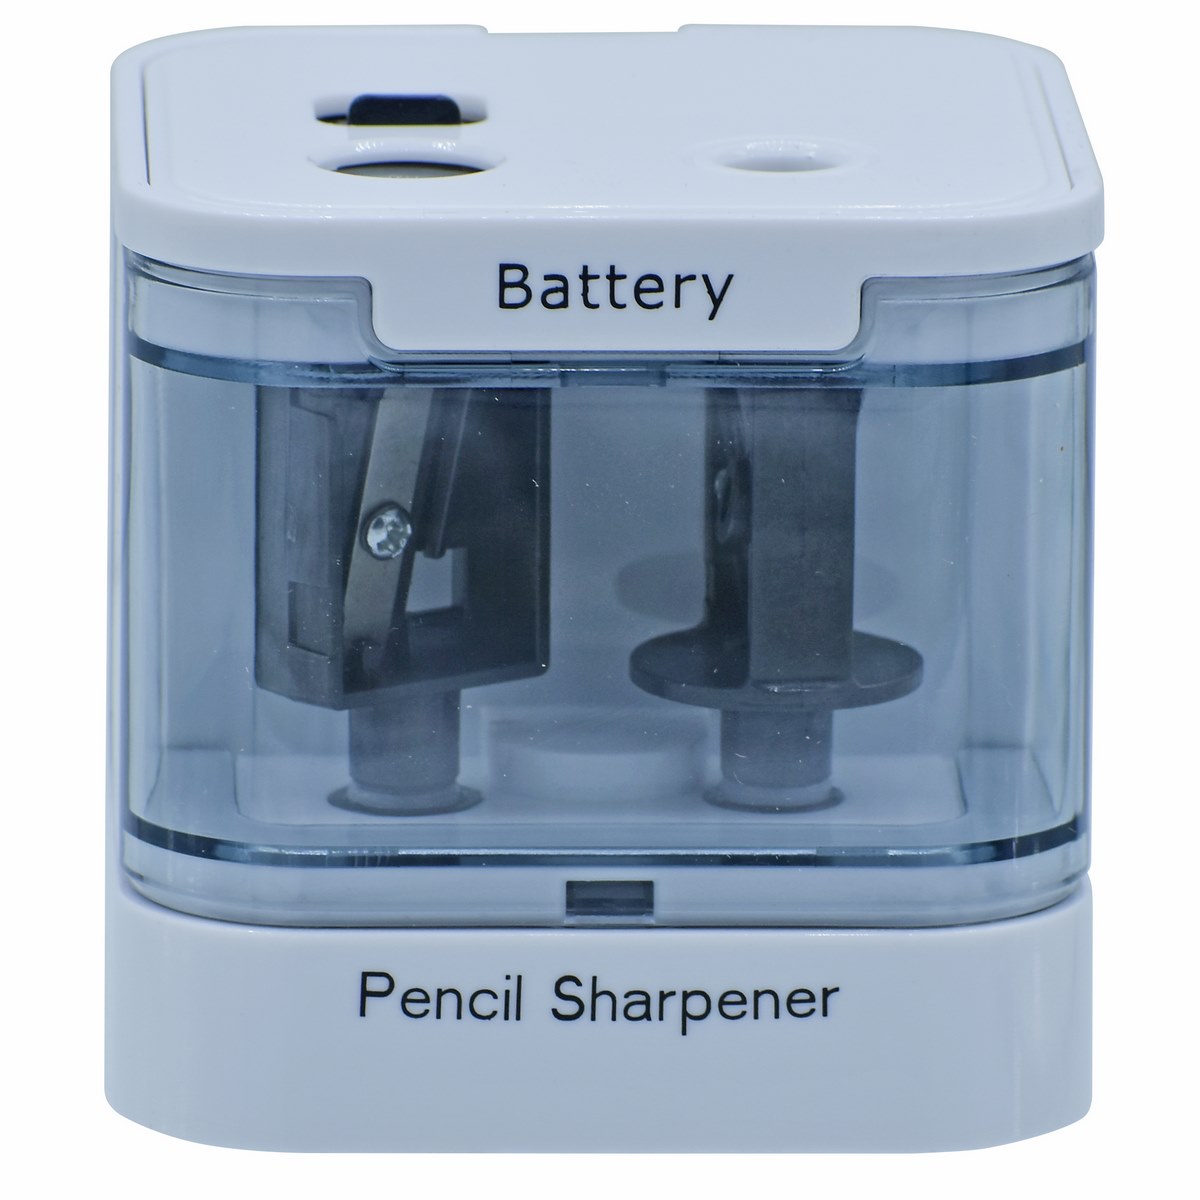 jags-mumbai Sharpener and Eraser Table Sharpener Battery Opreator PS-022BS